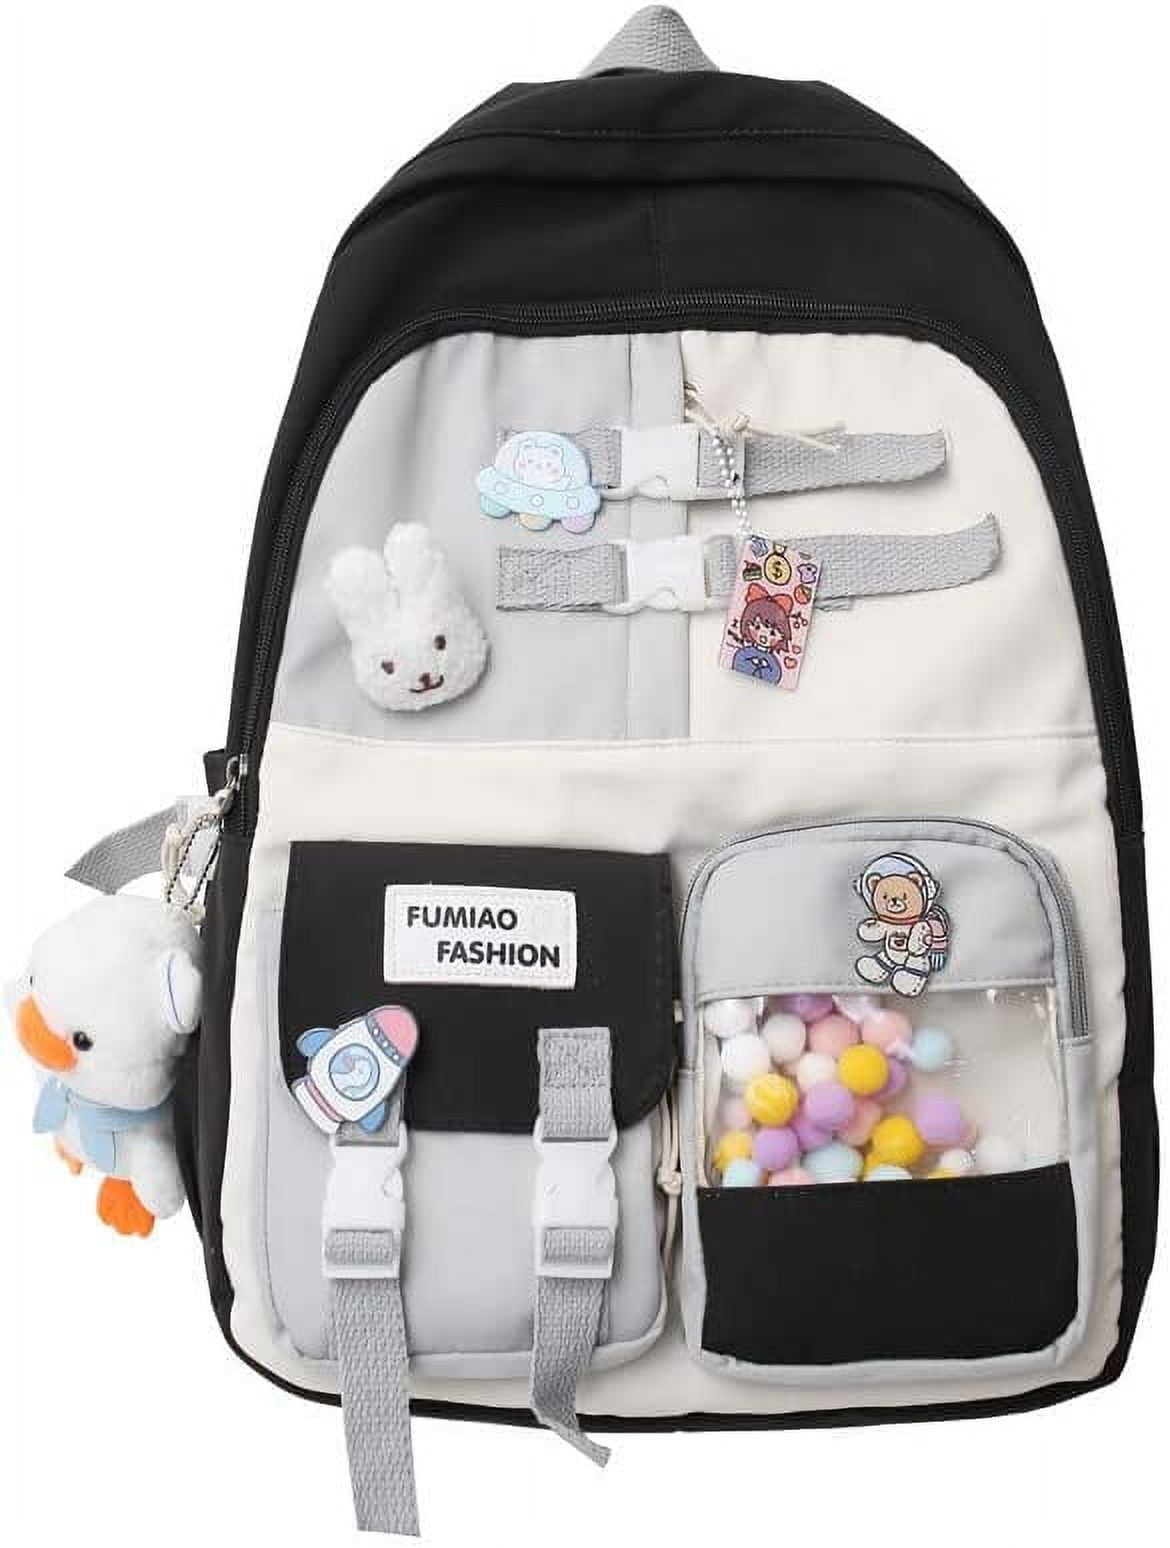 20-Pack Enamel Cat Pins Cute Cat Pins Enamel Pins for Backpacks Aesthetic  Cartoon Lapel Pins for Bags Clothing Decor,B 